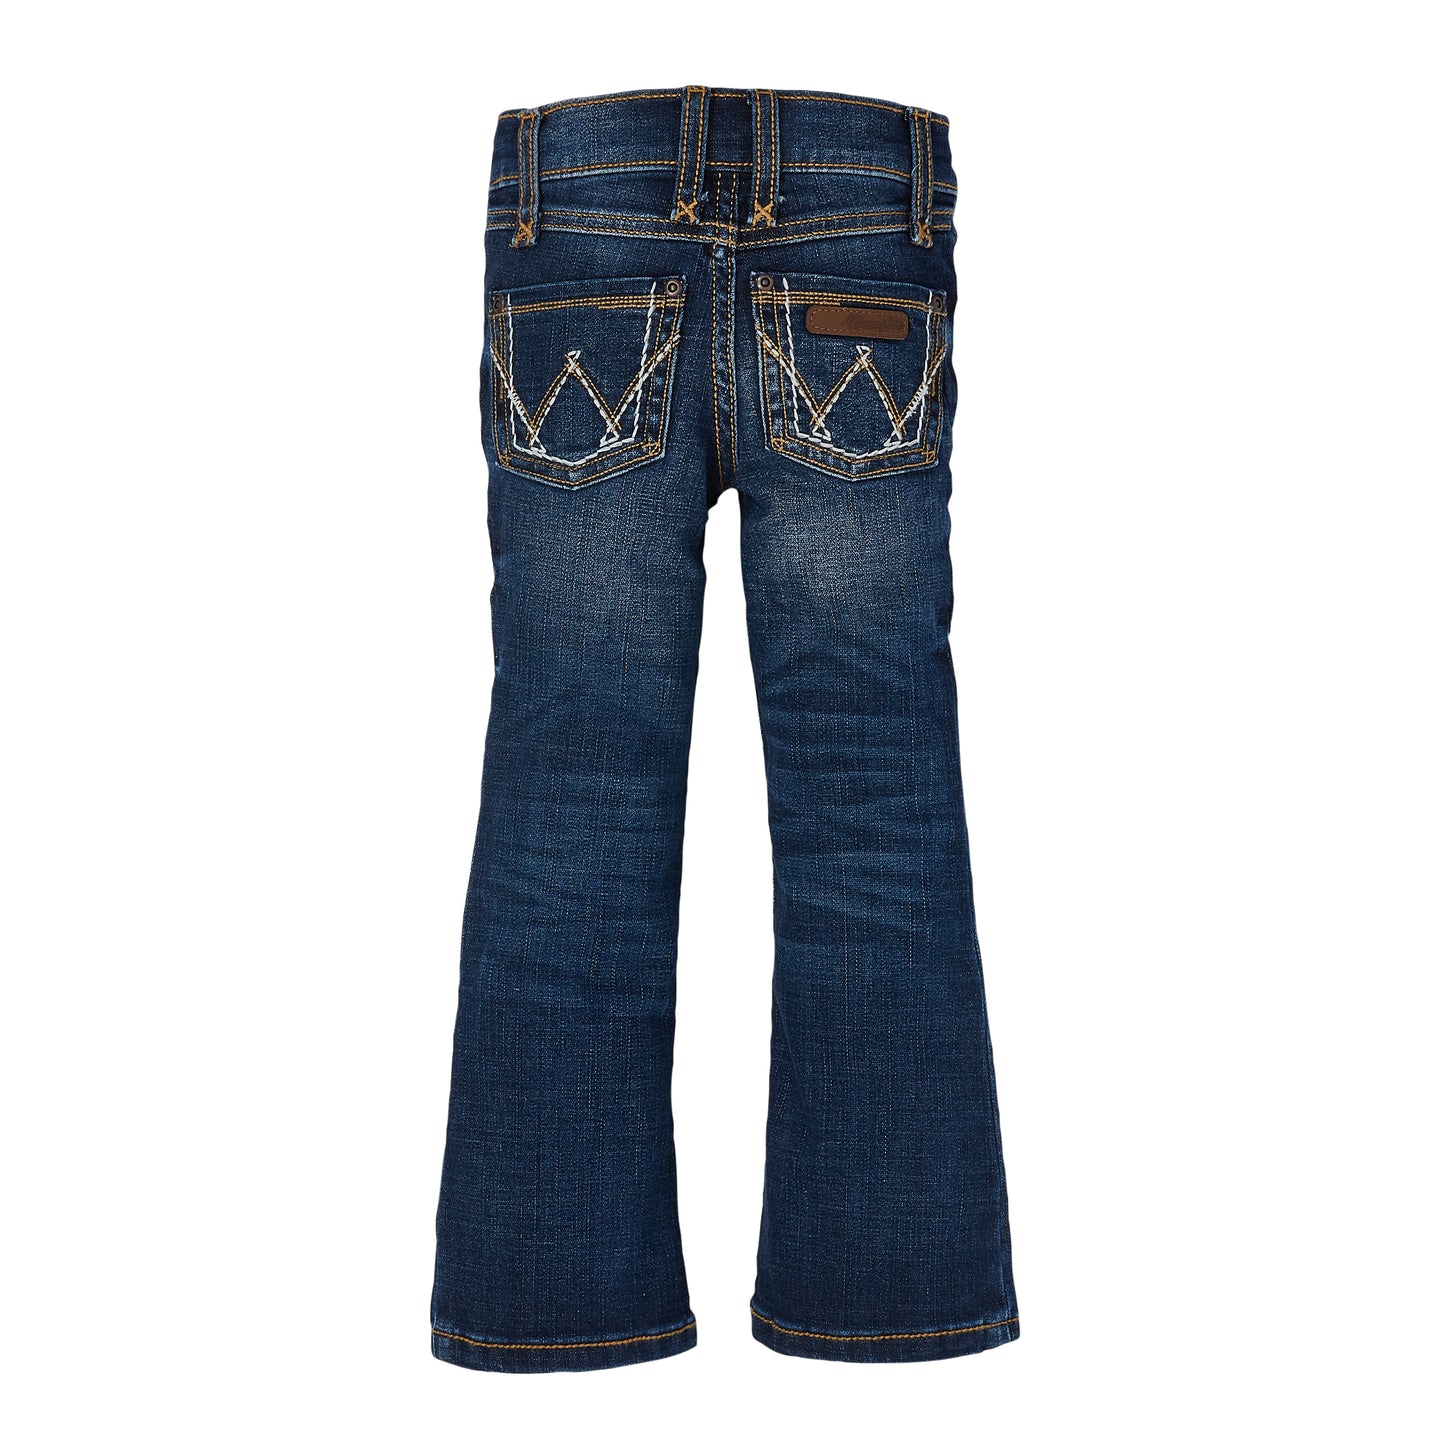 Wrangler Girls Premium Patch Low Rise Jeans - Medium Blue